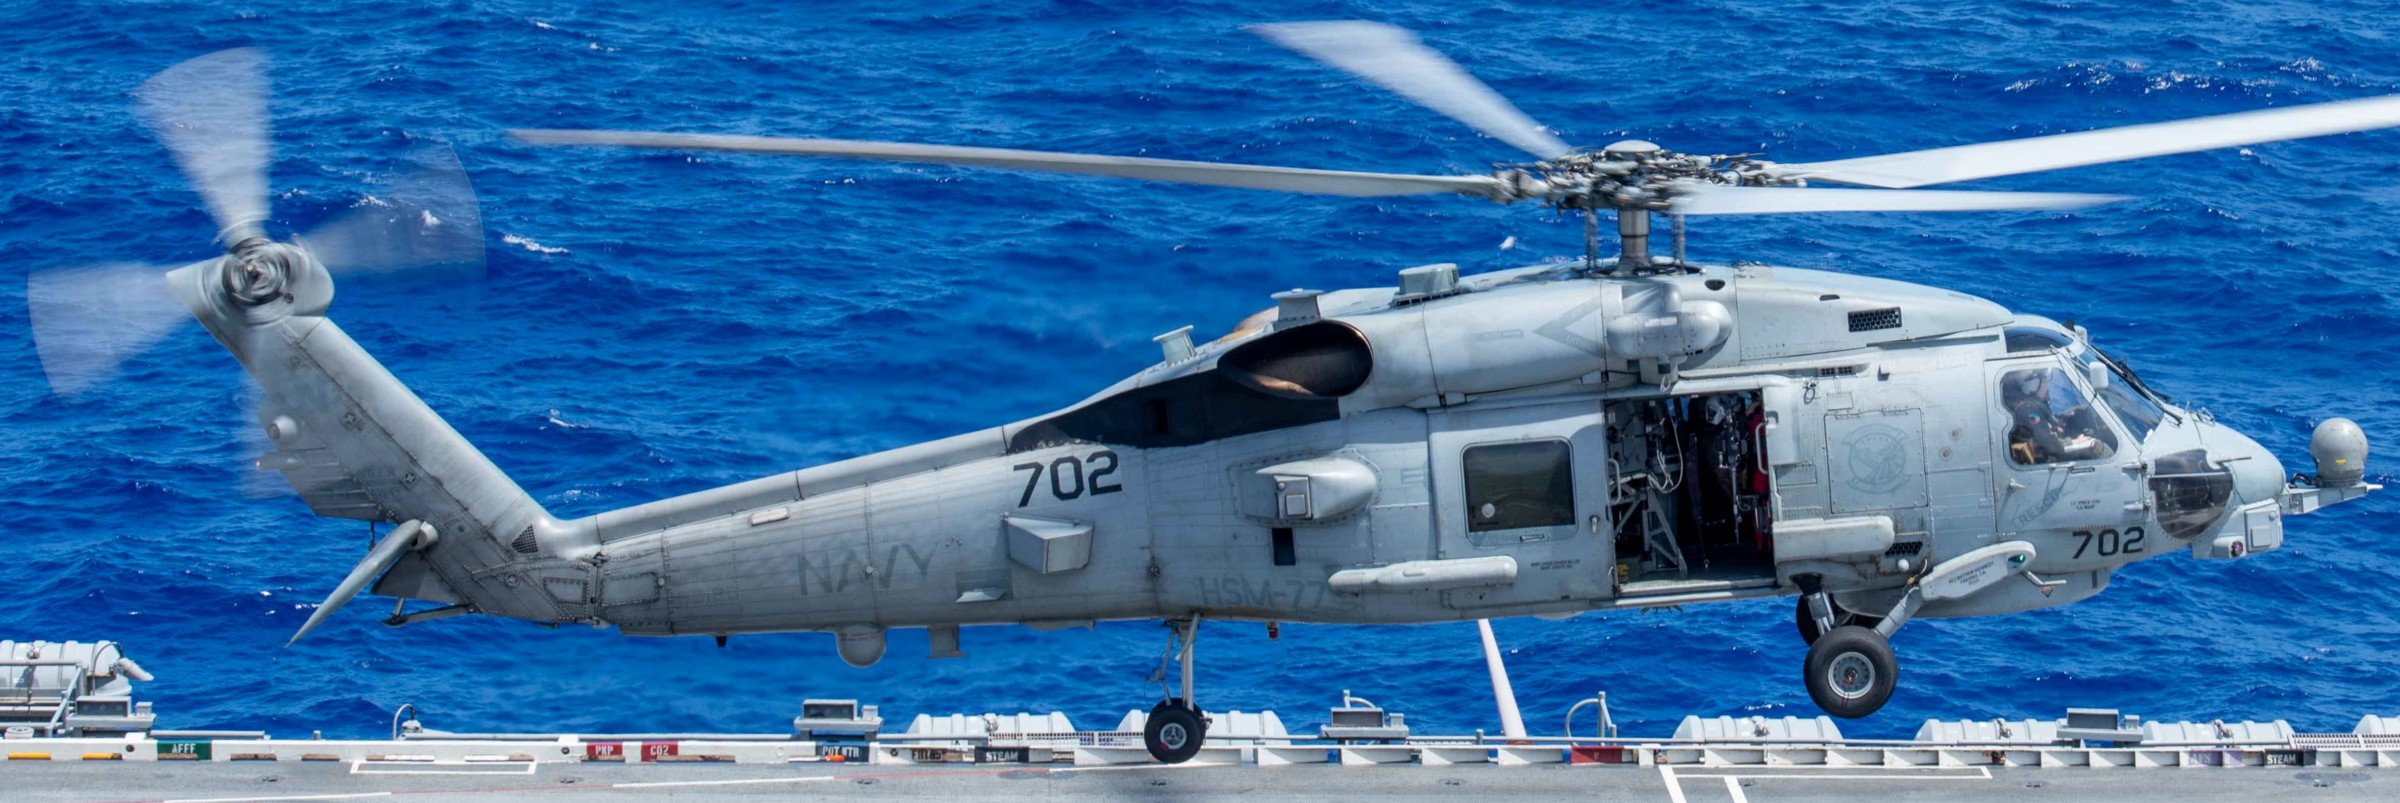 hsm-77 saberhawks helicopter maritime strike squadron mh-60r seahawk cvw-5 cvn-76 uss ronald reagan 107